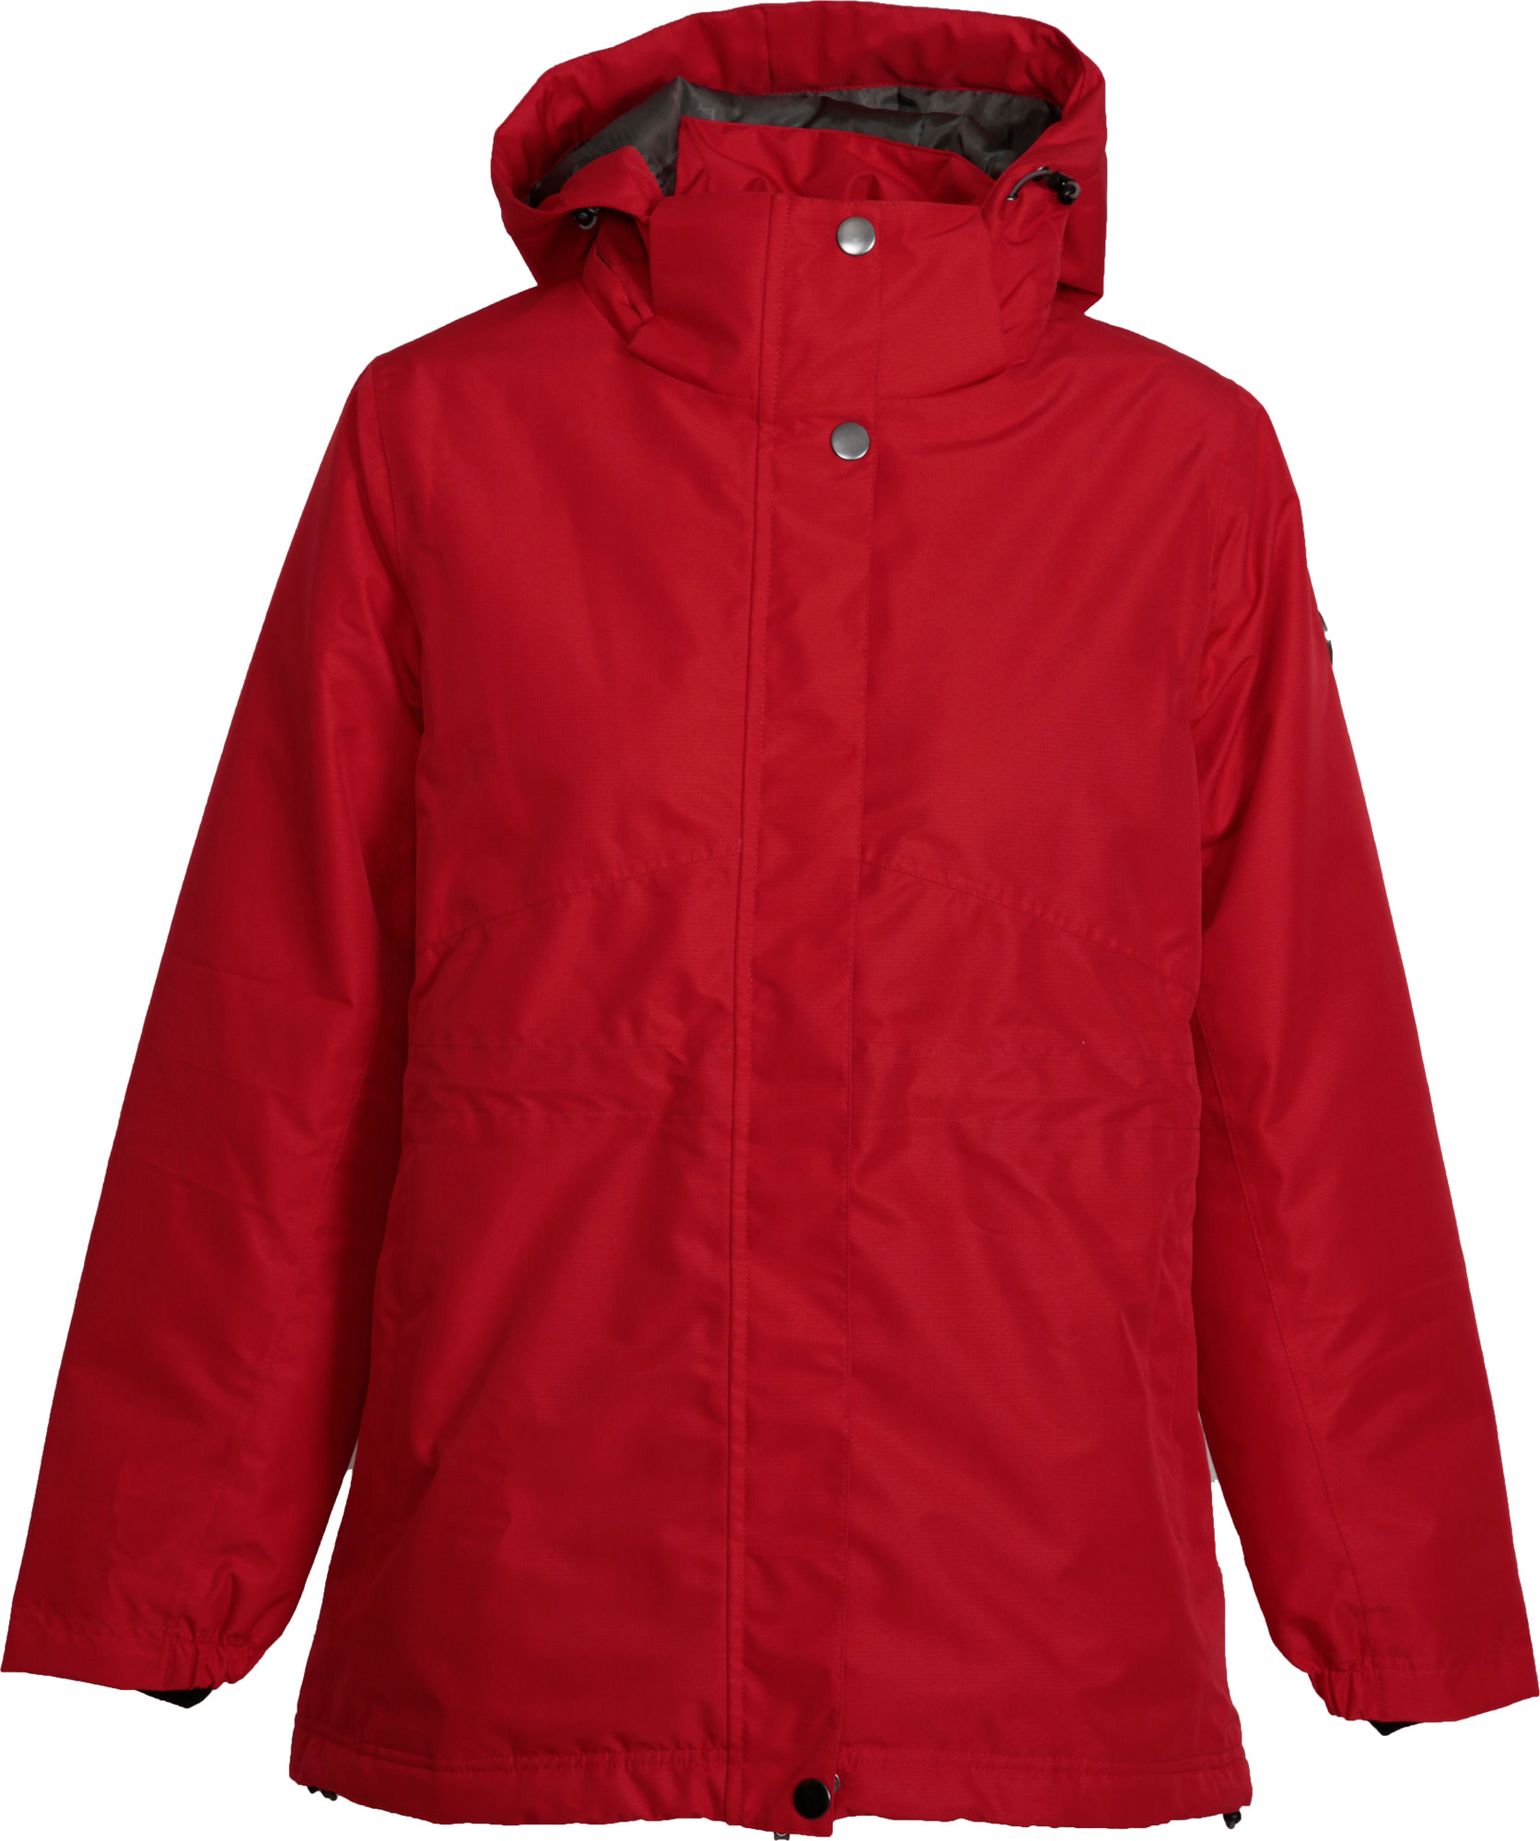 Women's Messina Jacket Red